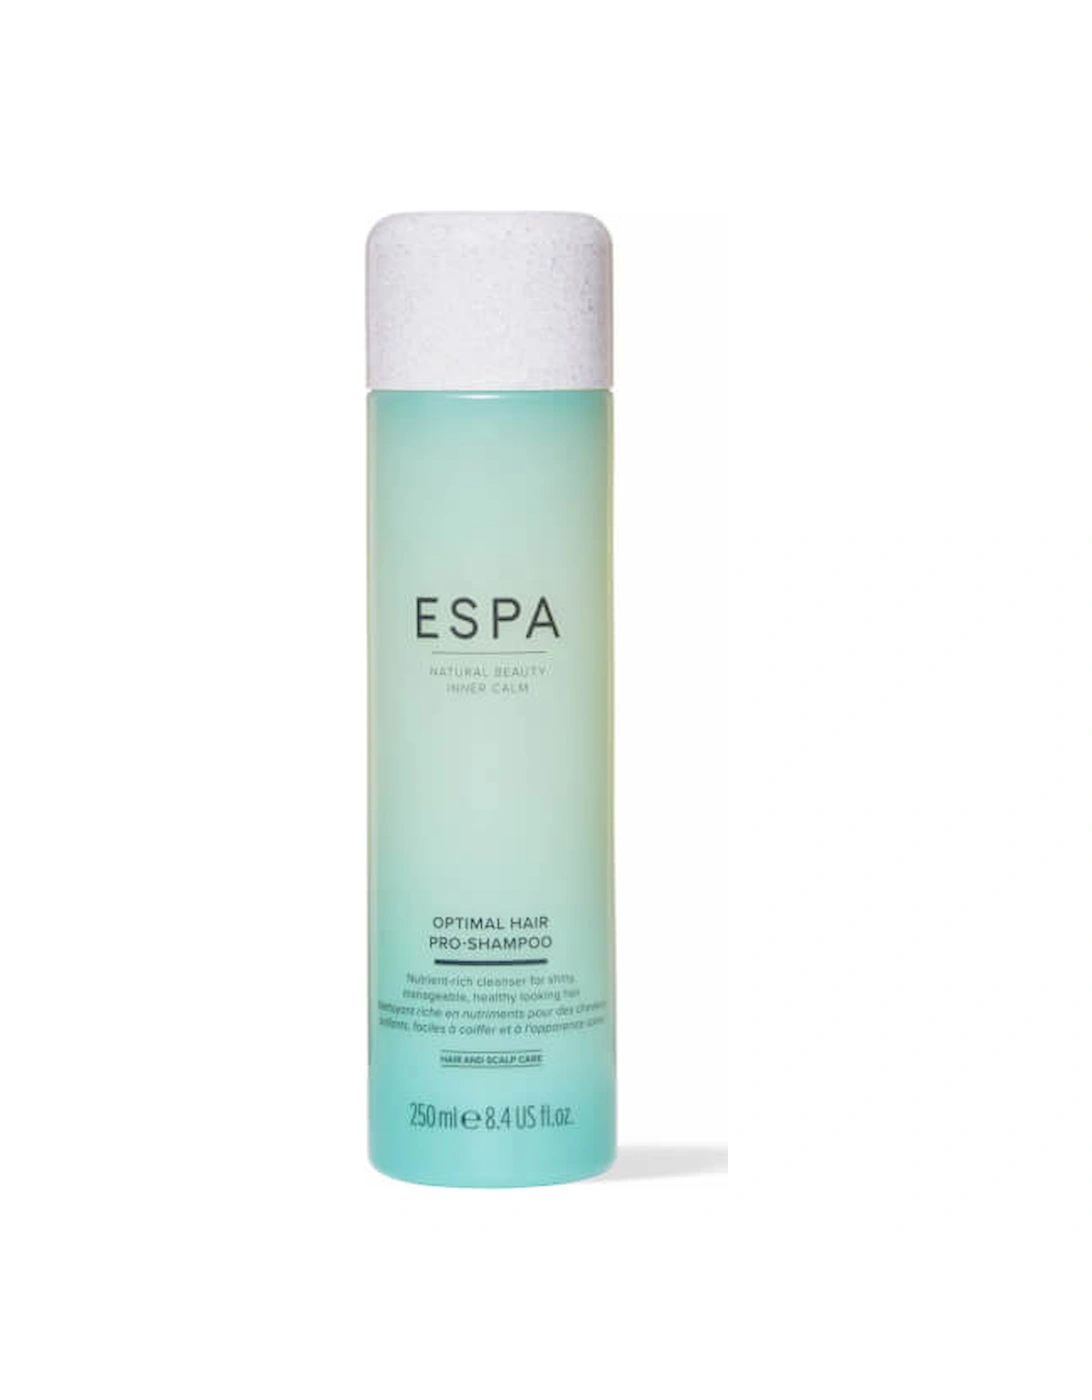 Optimal Hair Pro-Shampoo 250ml - ESPA, 2 of 1